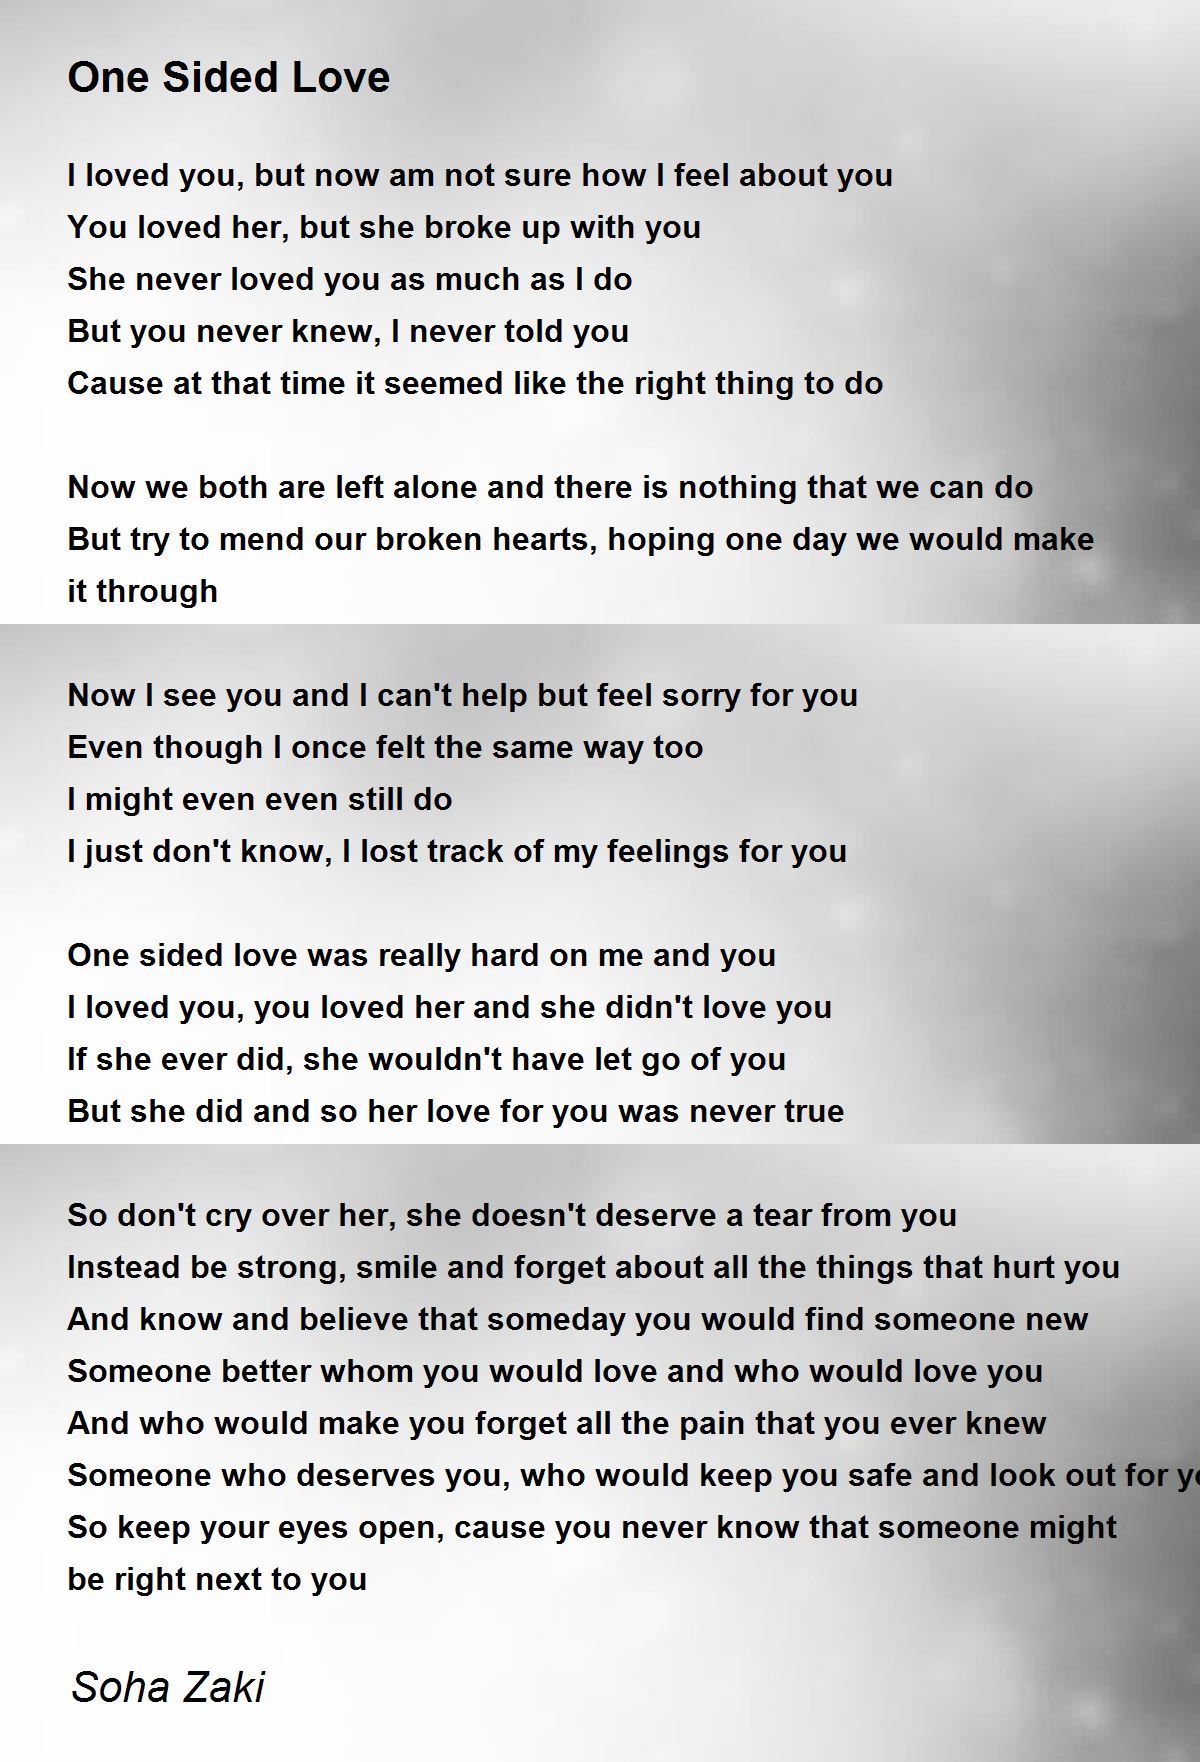 One Sided Love - One Sided Love Poem by Soha Zaki